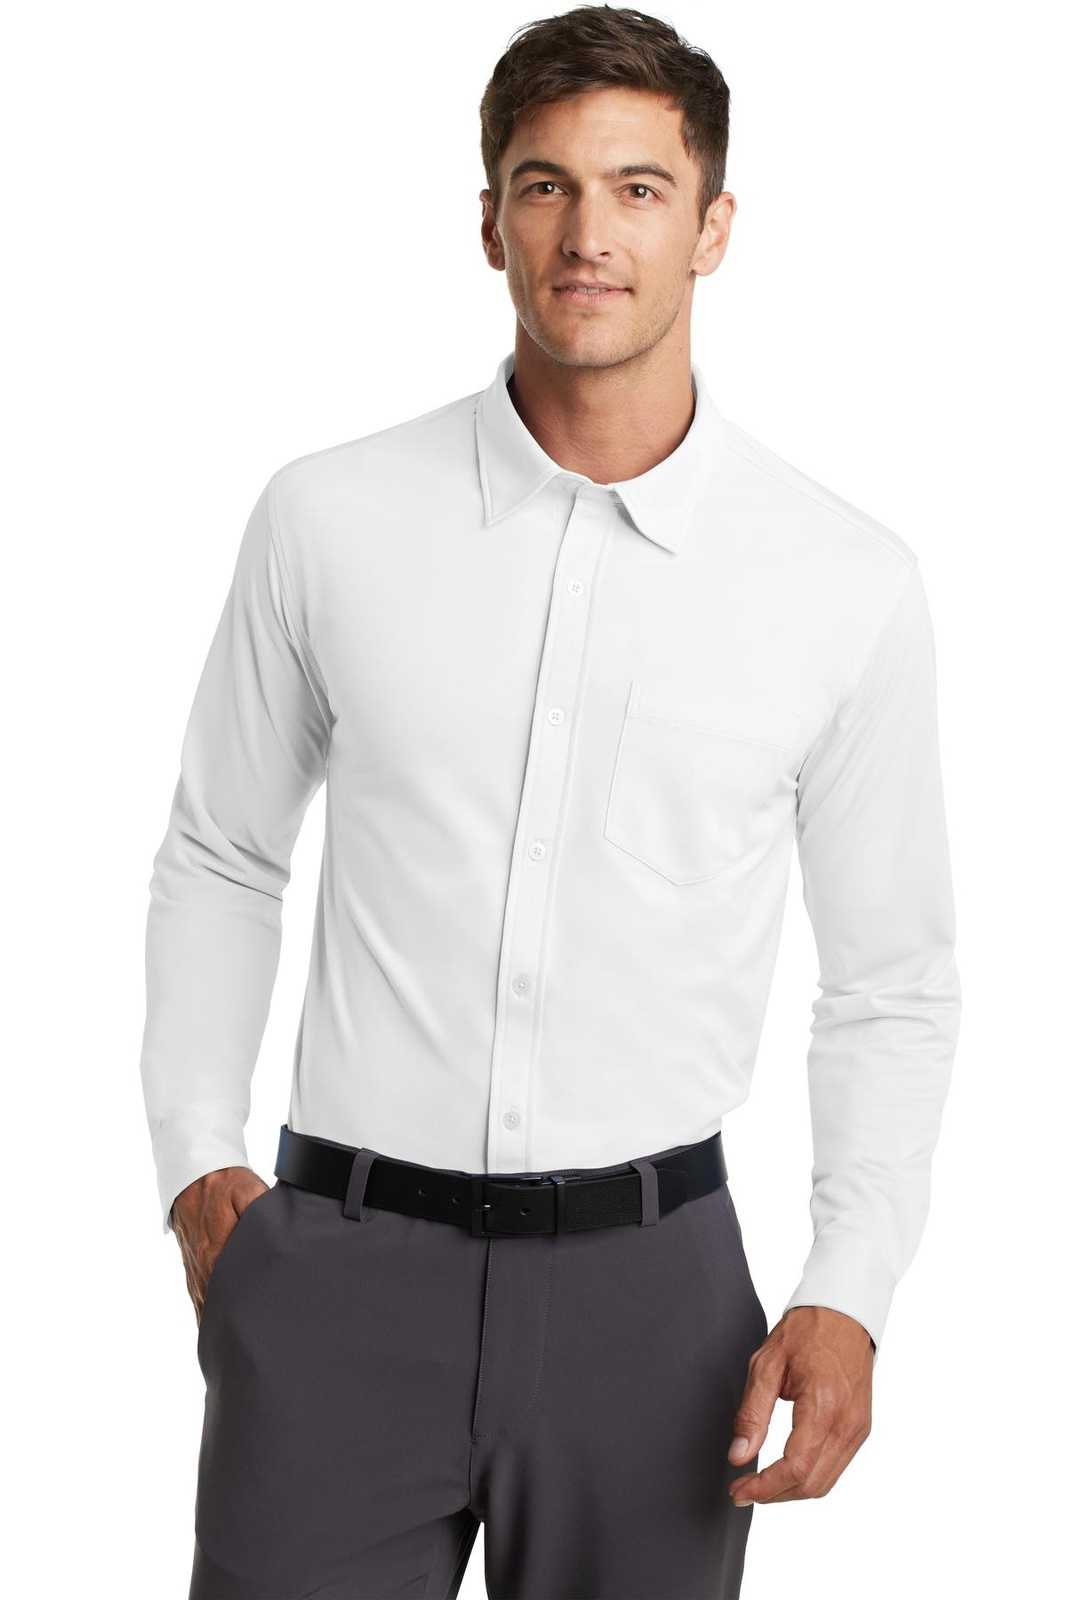 Port Authority K570 Dimension Knit Dress Shirt - White - HIT a Double - 1